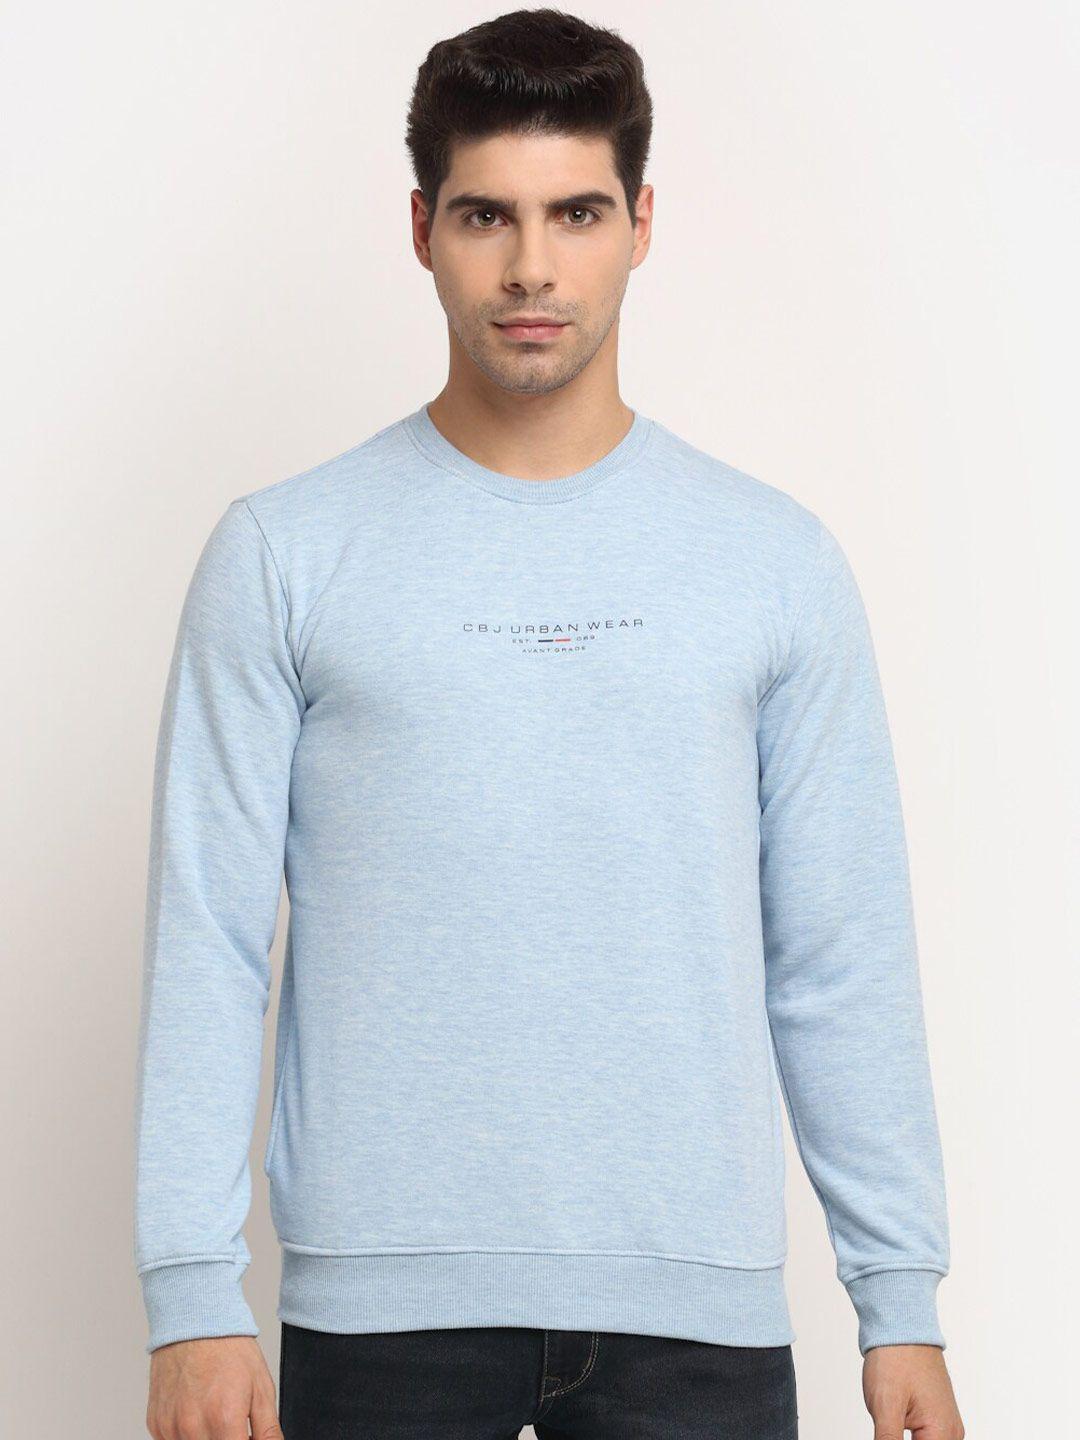 Cantabil Men Blue Sweatshirt